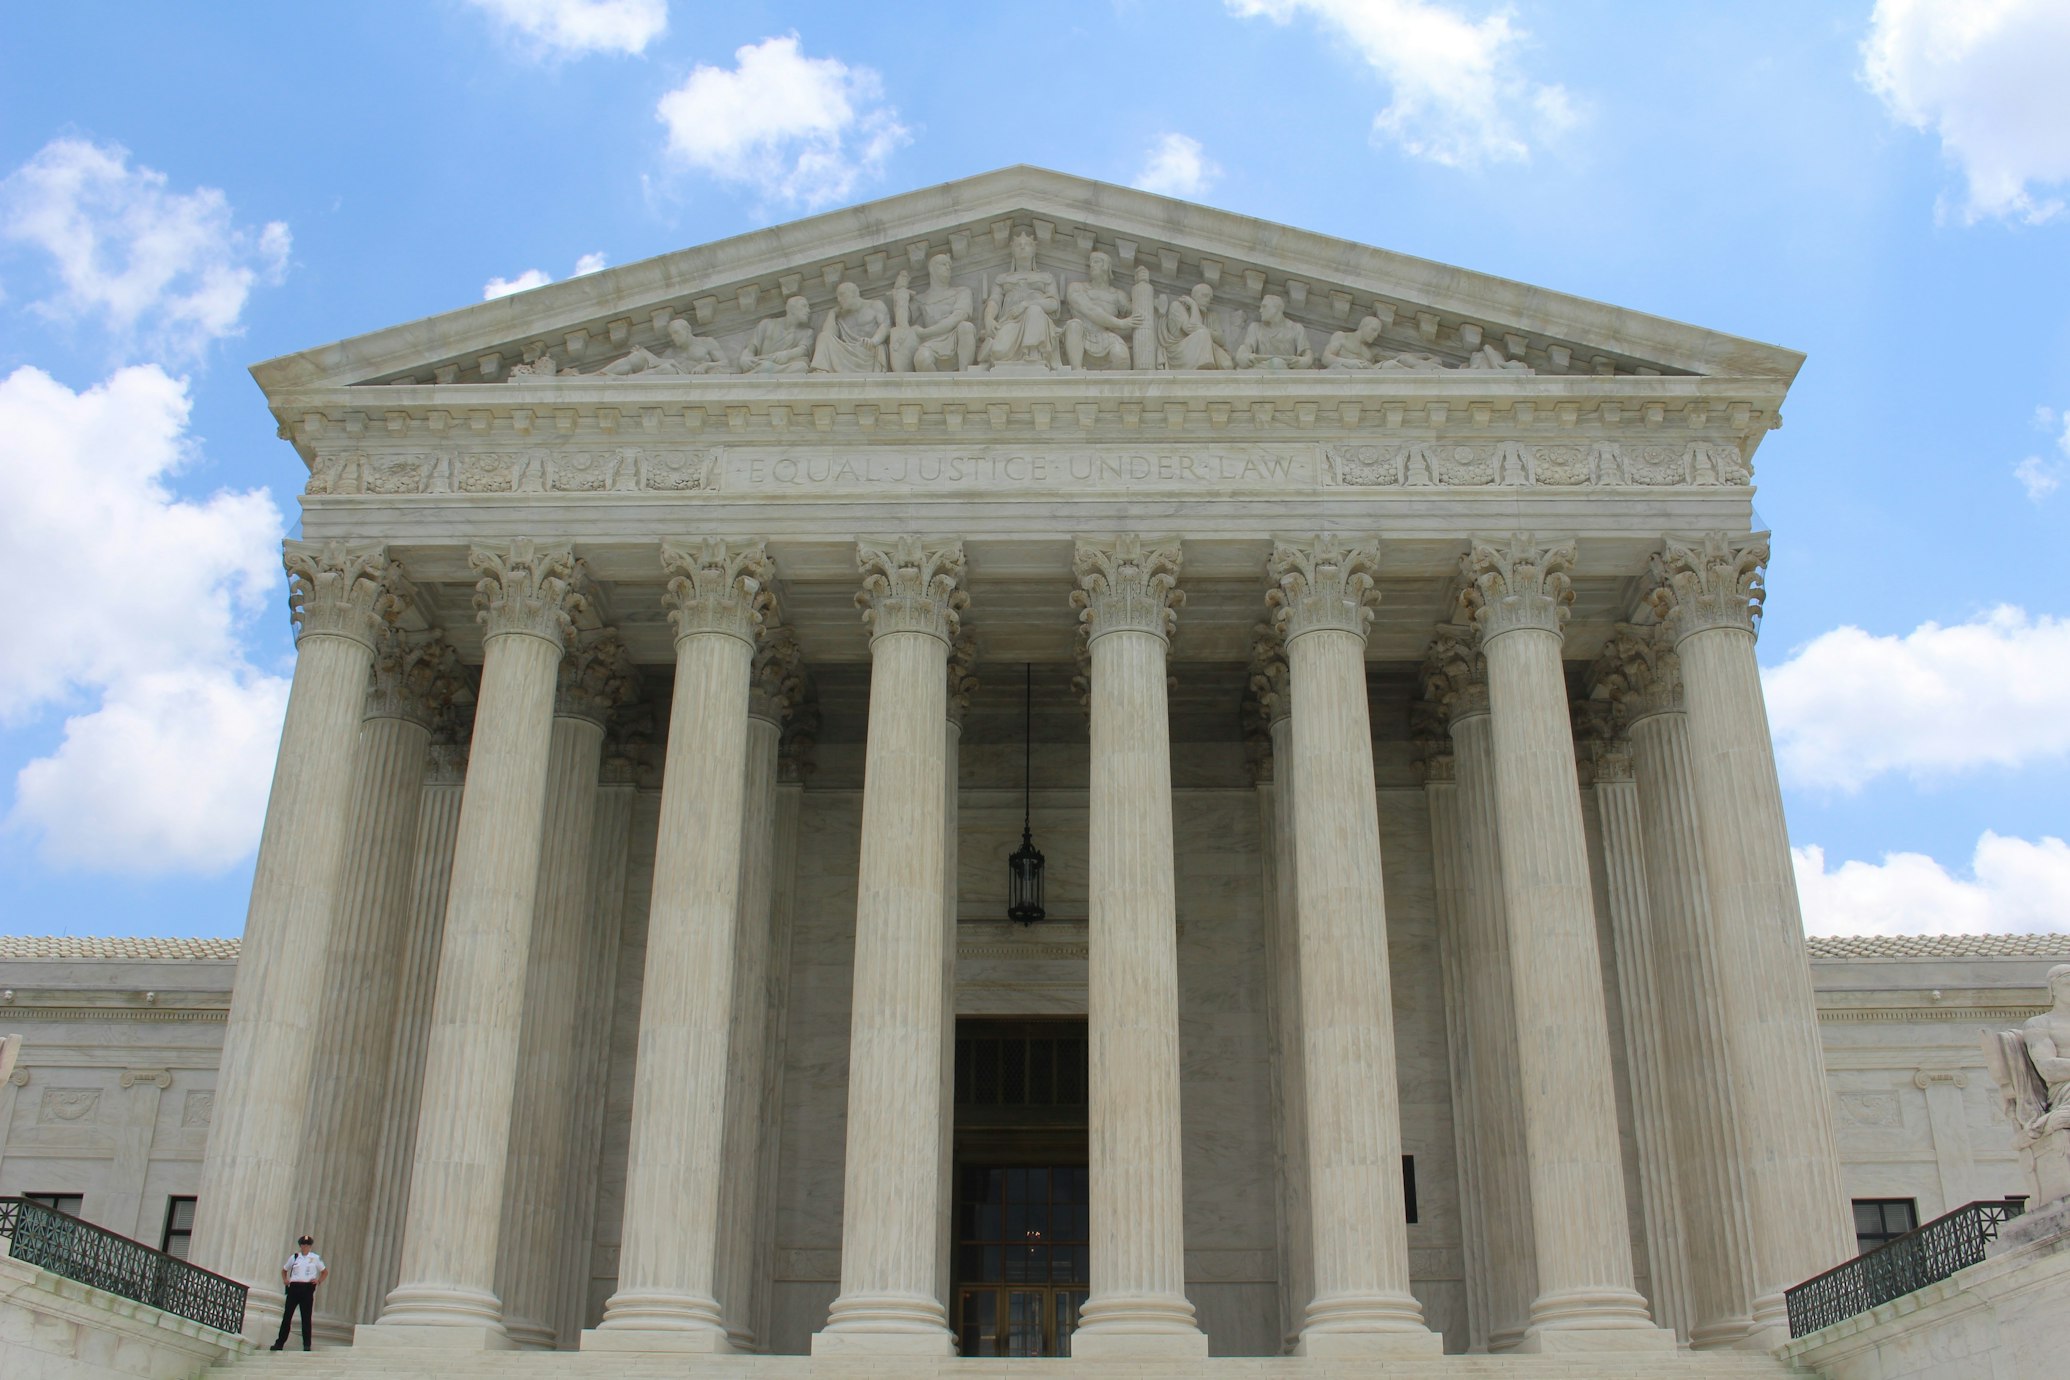 The US Supreme Court (Claire Anderson via Unsplash)